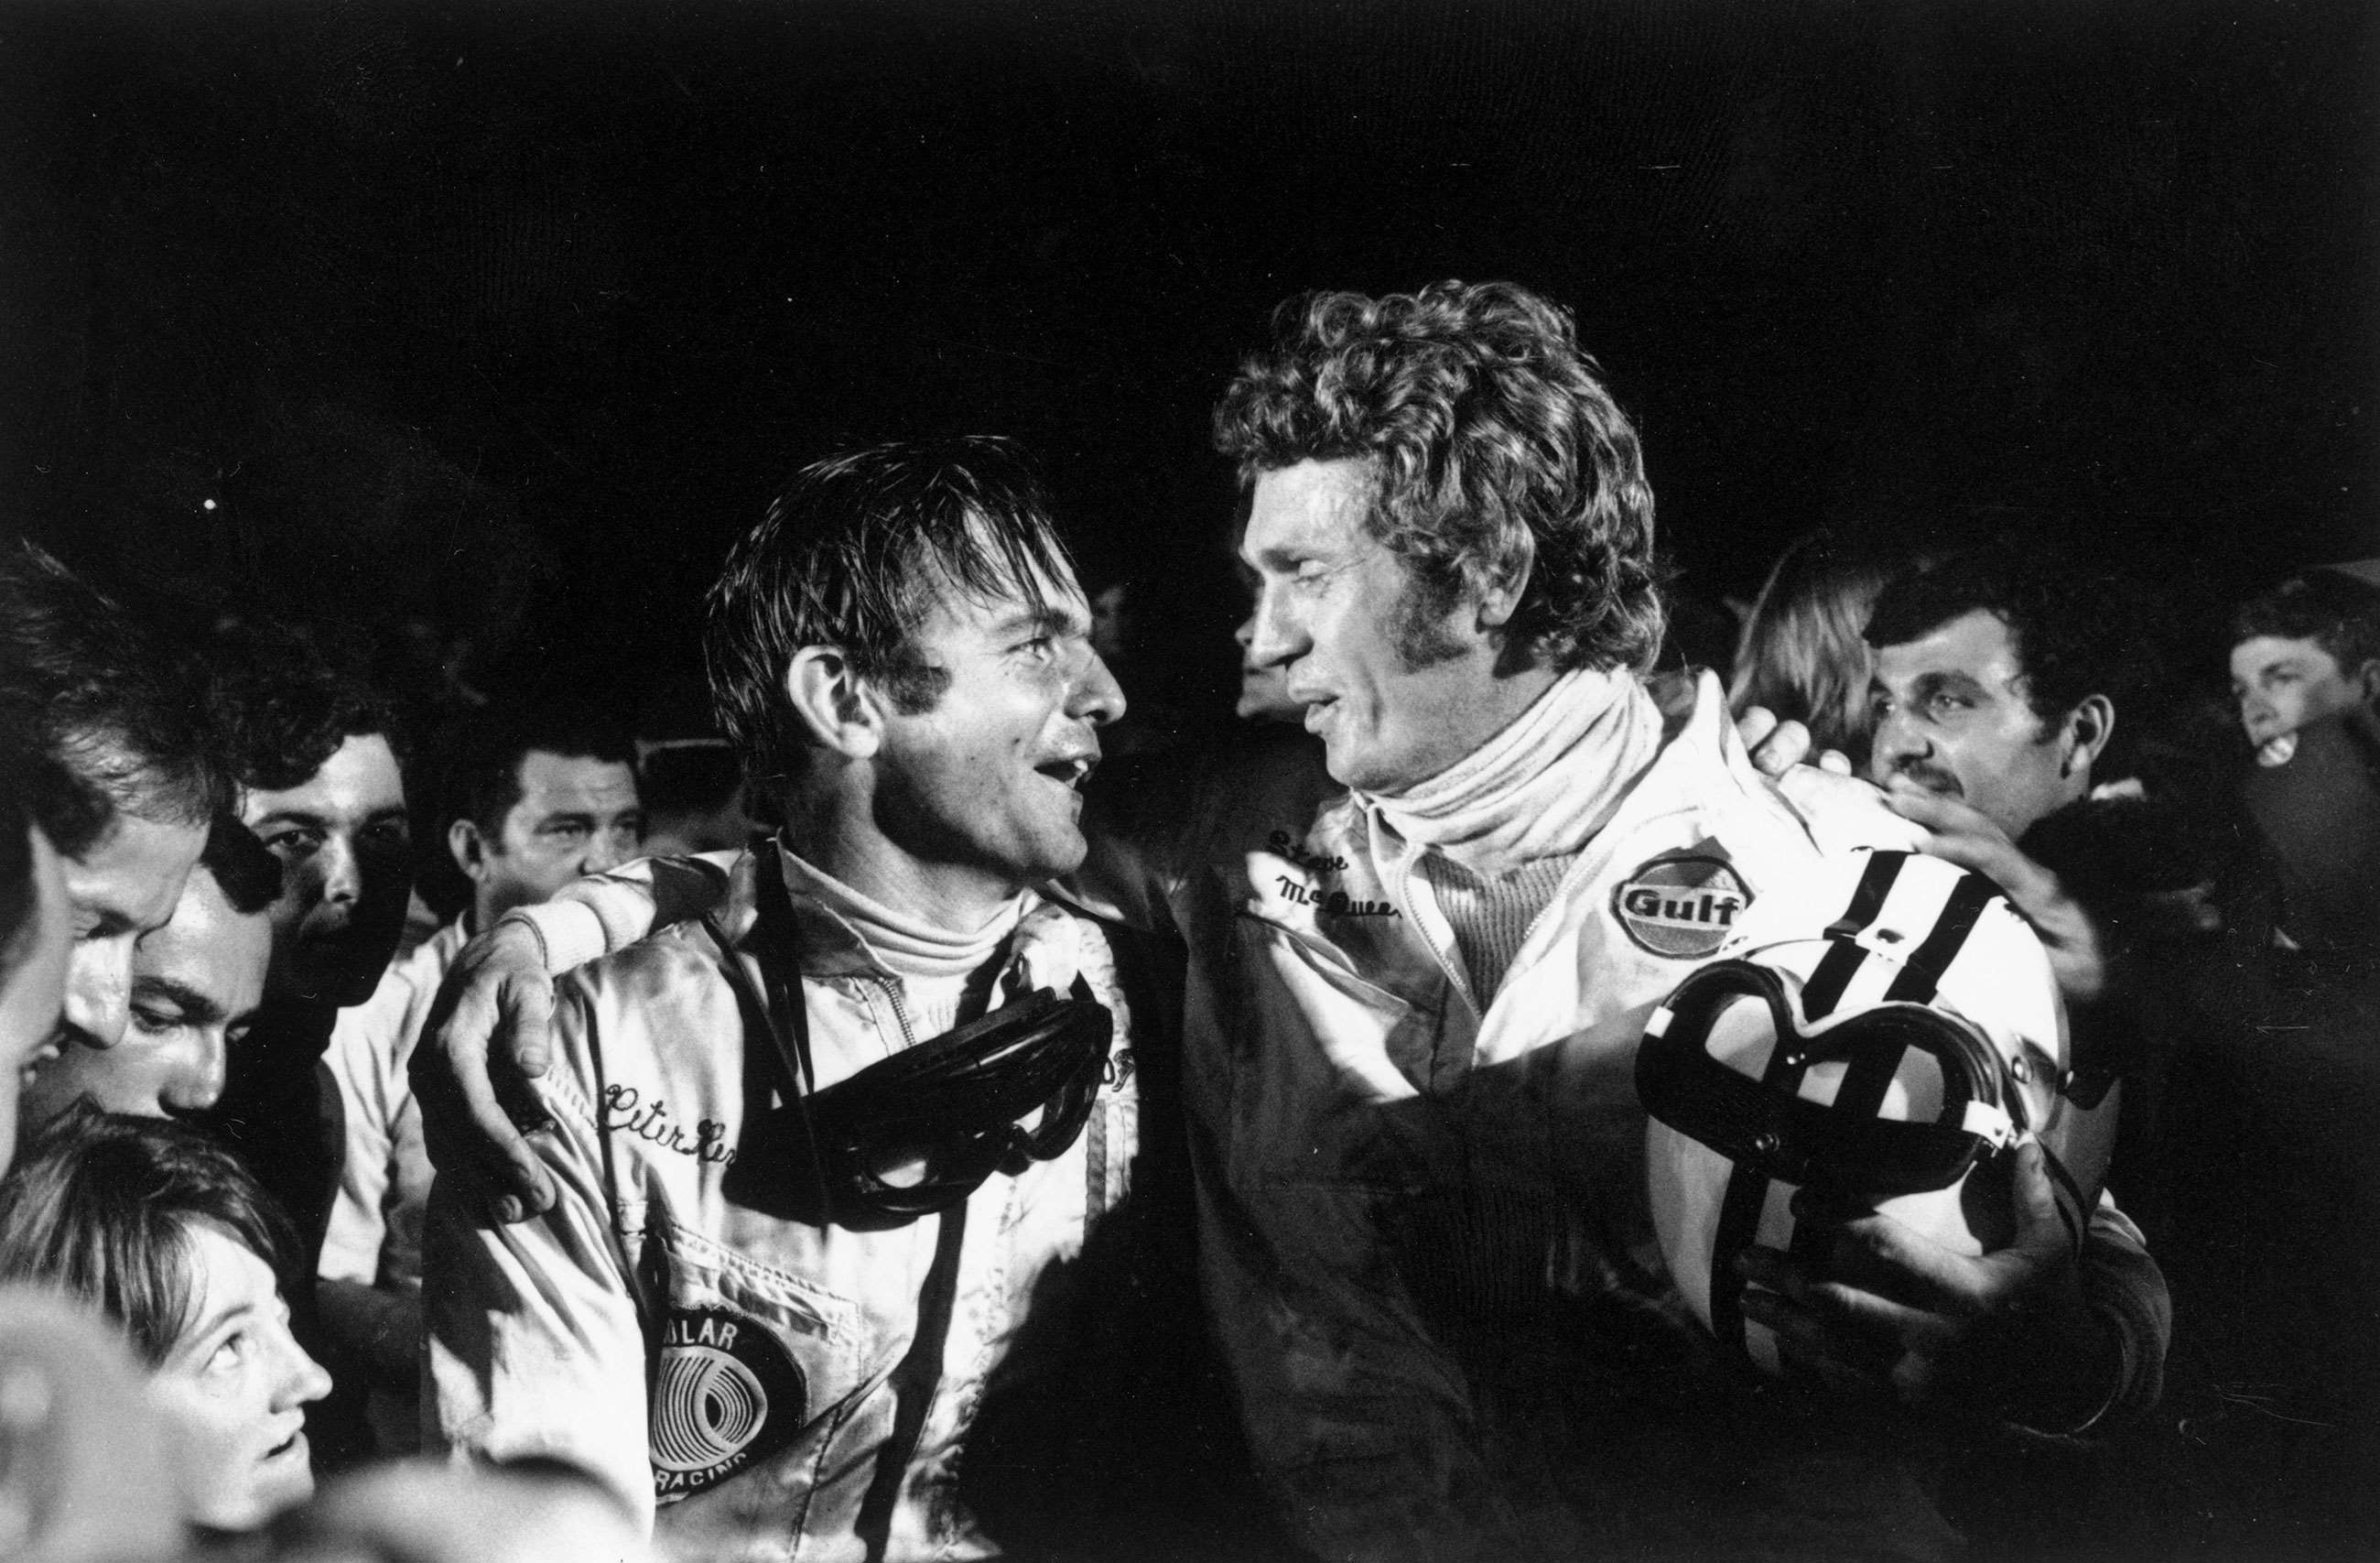 celebrity-racing-drivers-5-steve-mcqueen-sebring-1970-lat-mi-goodwood-27082020.jpg